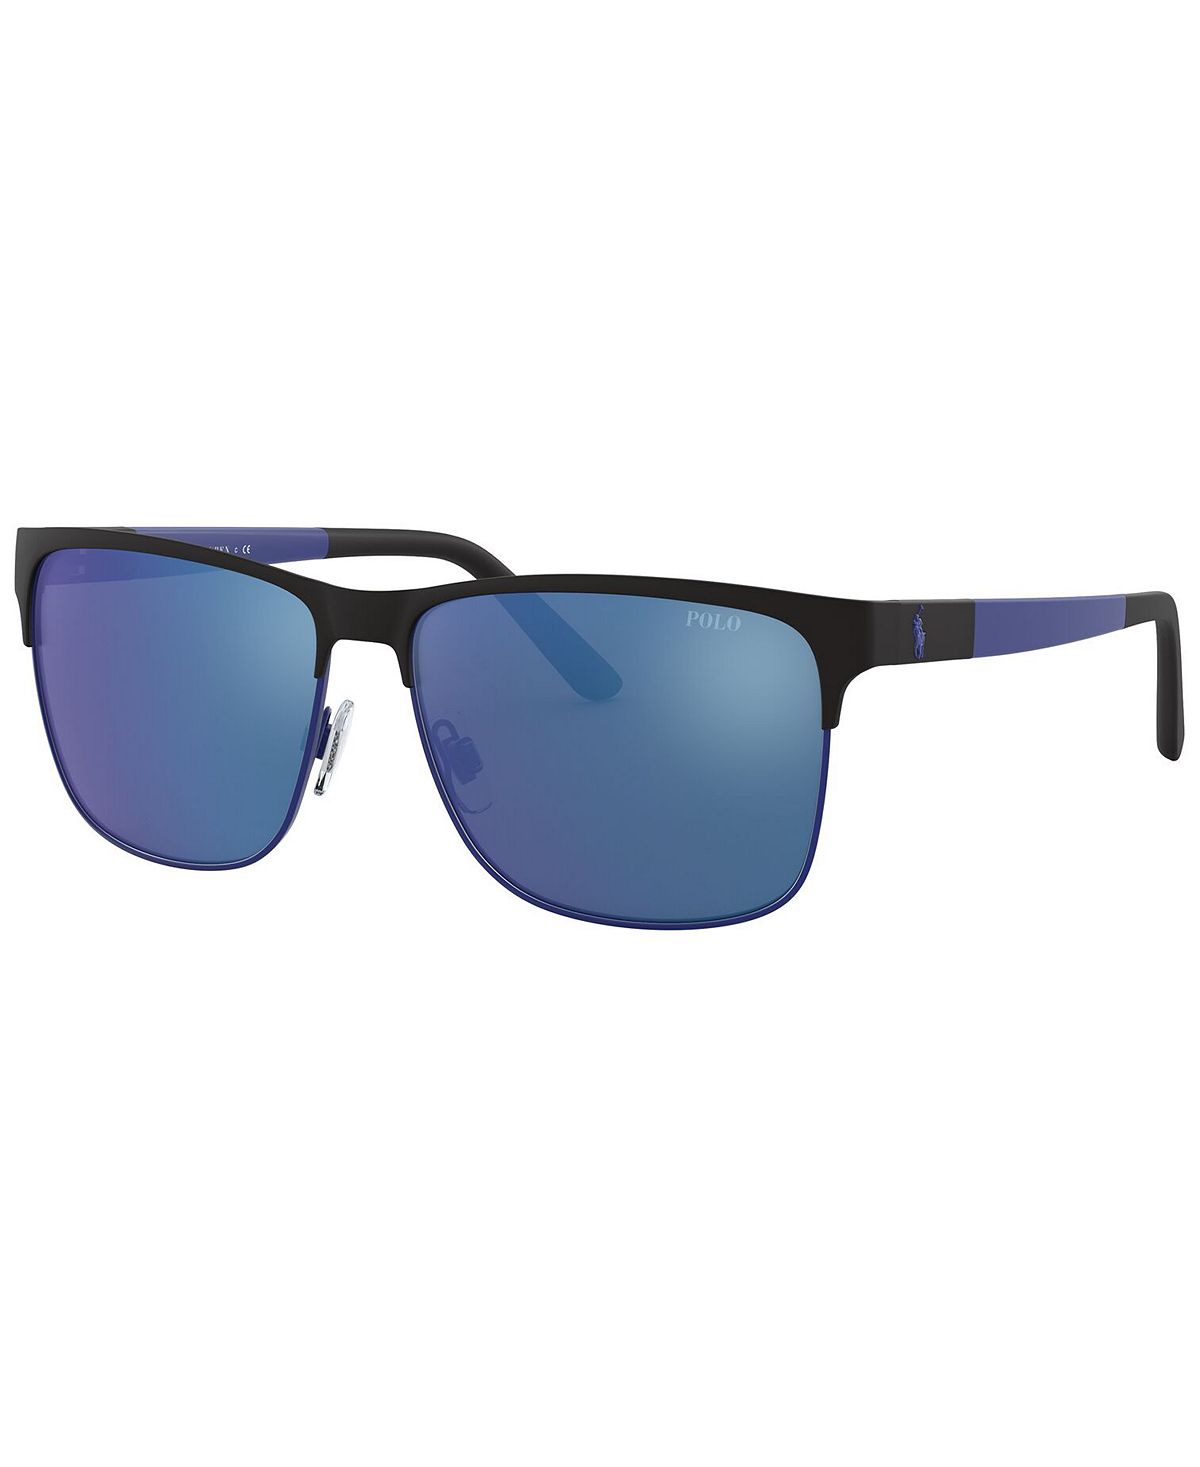 Солнцезащитные очки, PH3128 57 Polo Ralph Lauren t8048 matte black 700 мл c13t804800